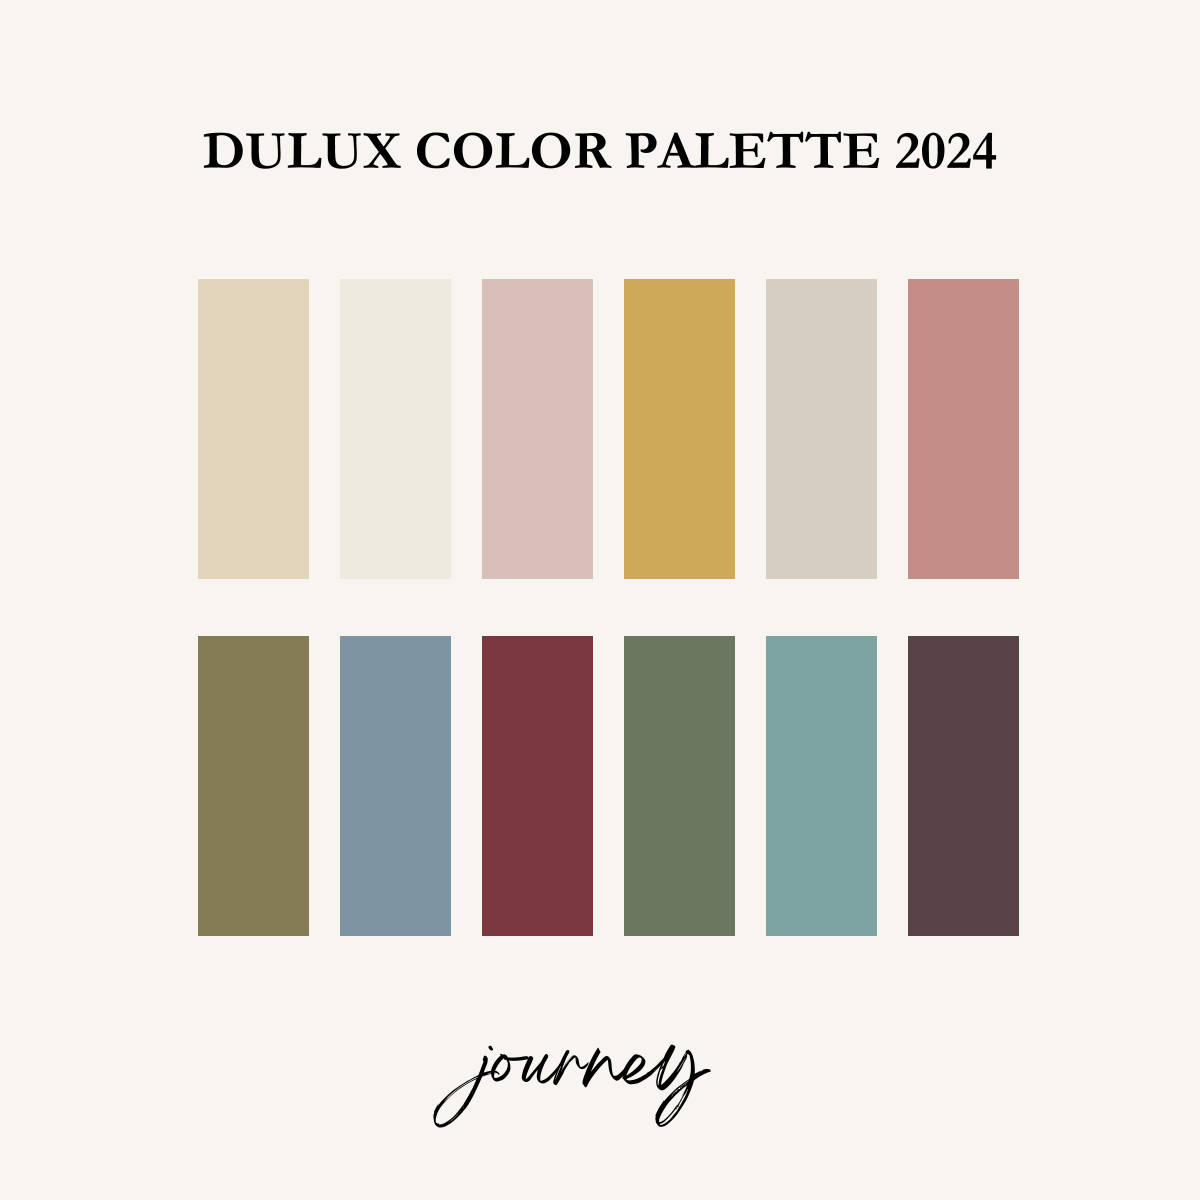 dulux-color-forecast-journey-palette-nordroom